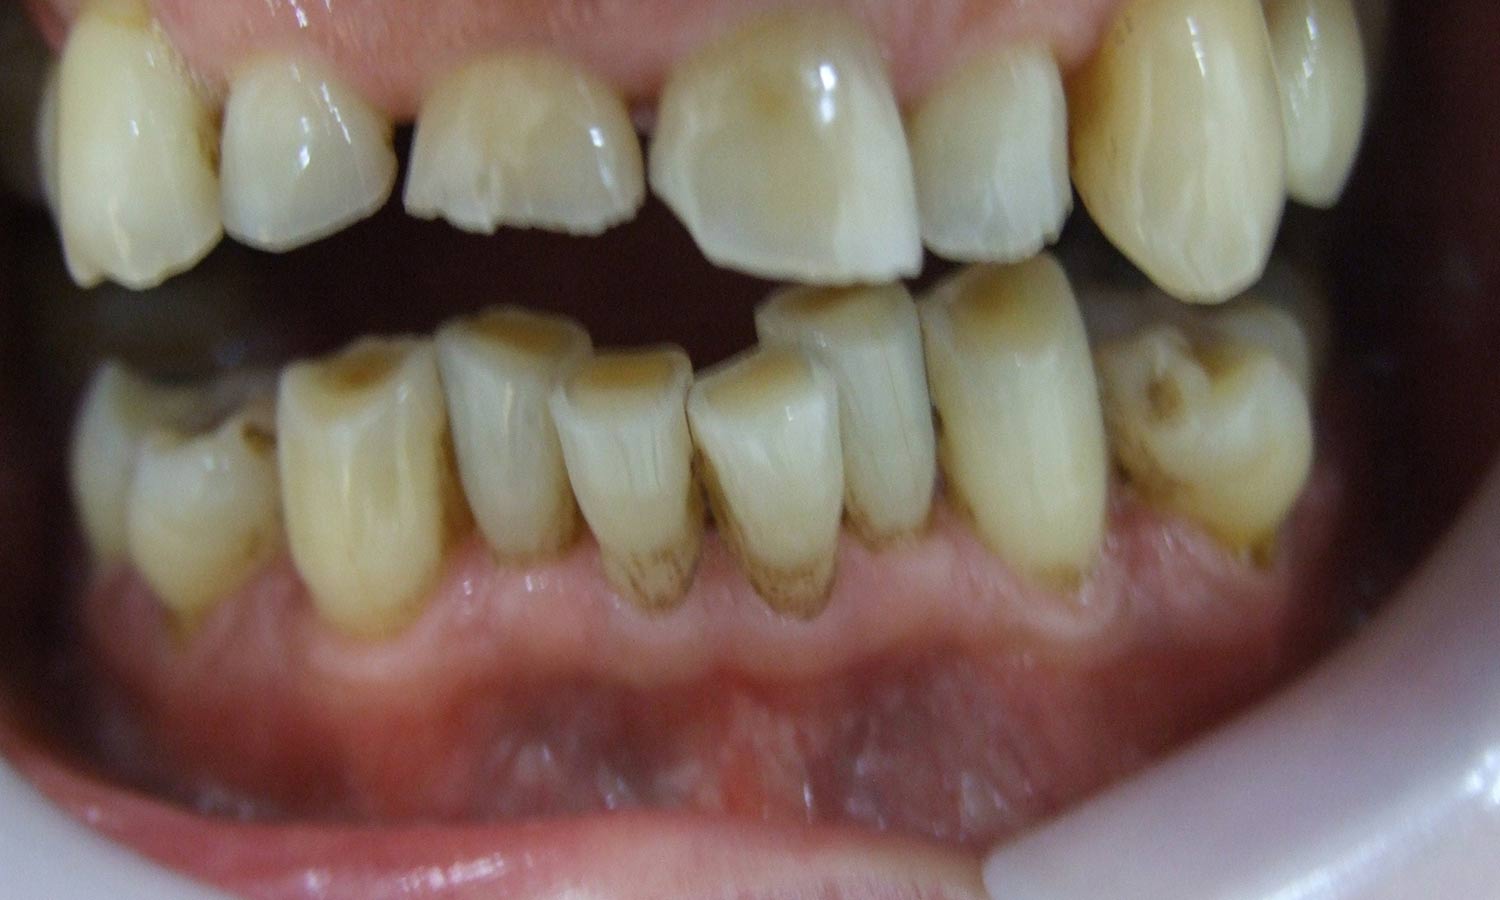 severely worn teeth before treatment